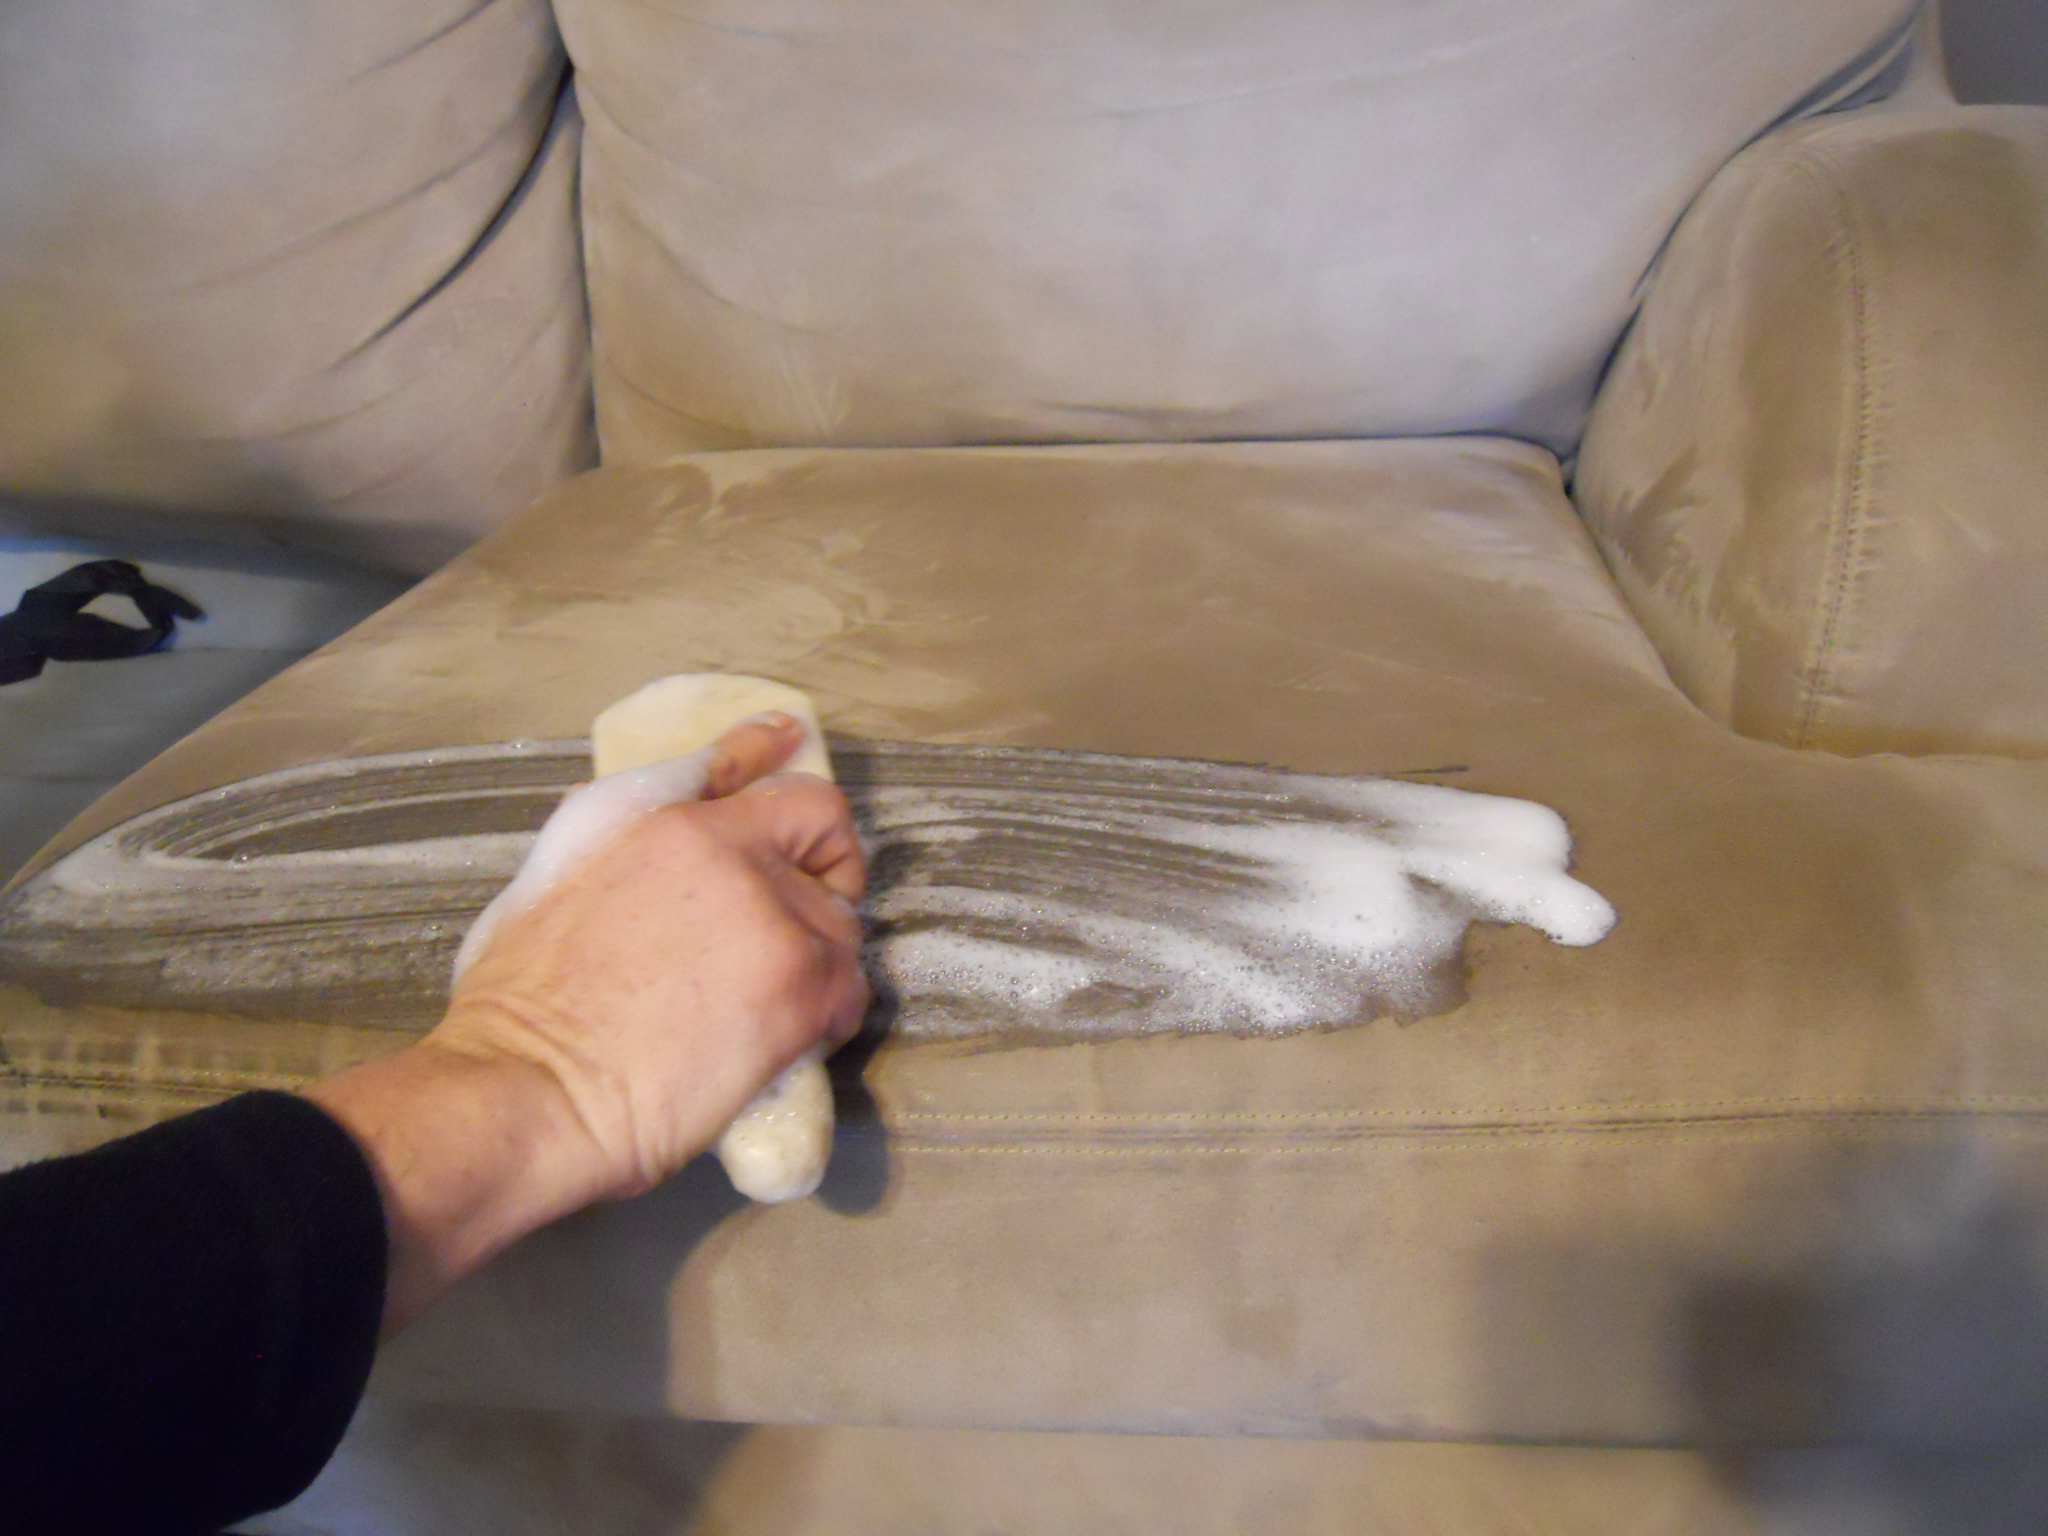 отмыть диван от запаха